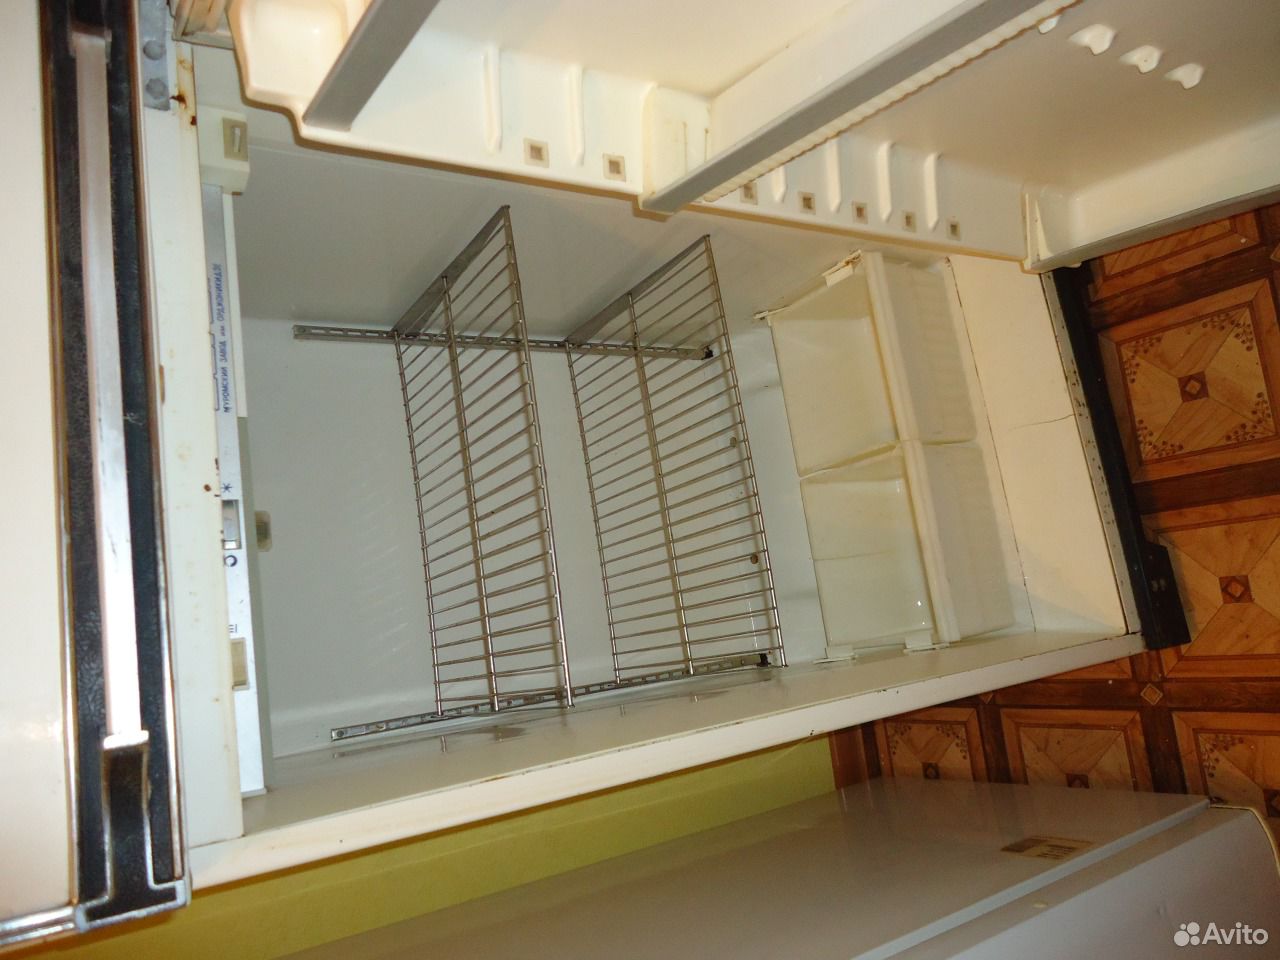 холодильник ока 6м 
